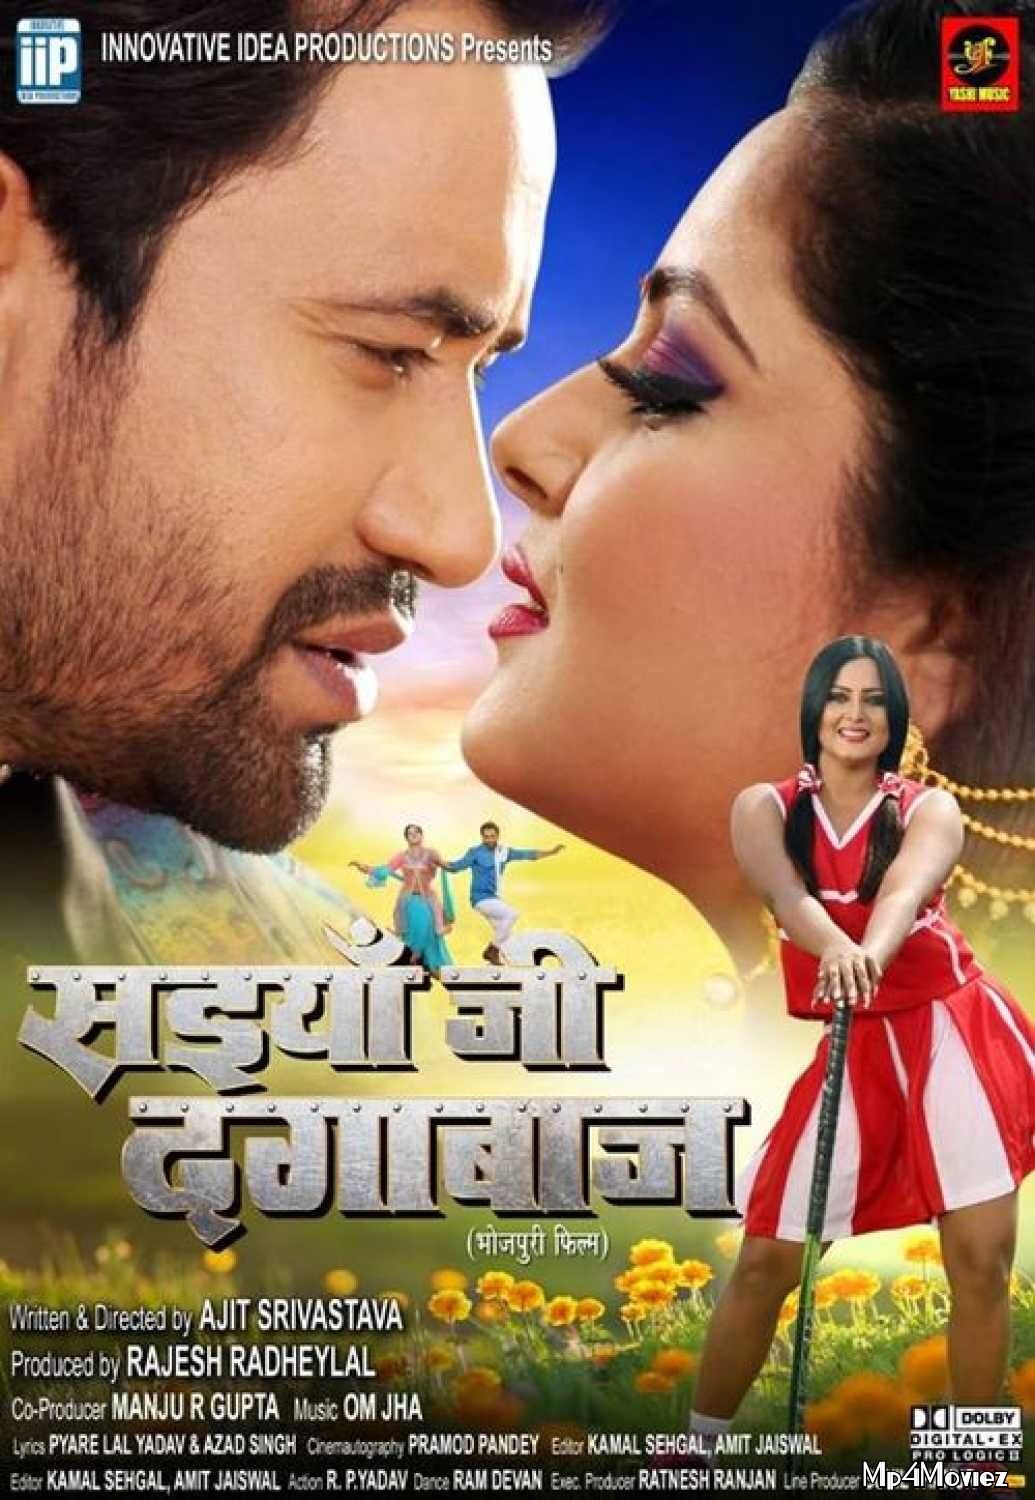 Saiyaan Ji Dagabaaz 2019 Full Movie download full movie